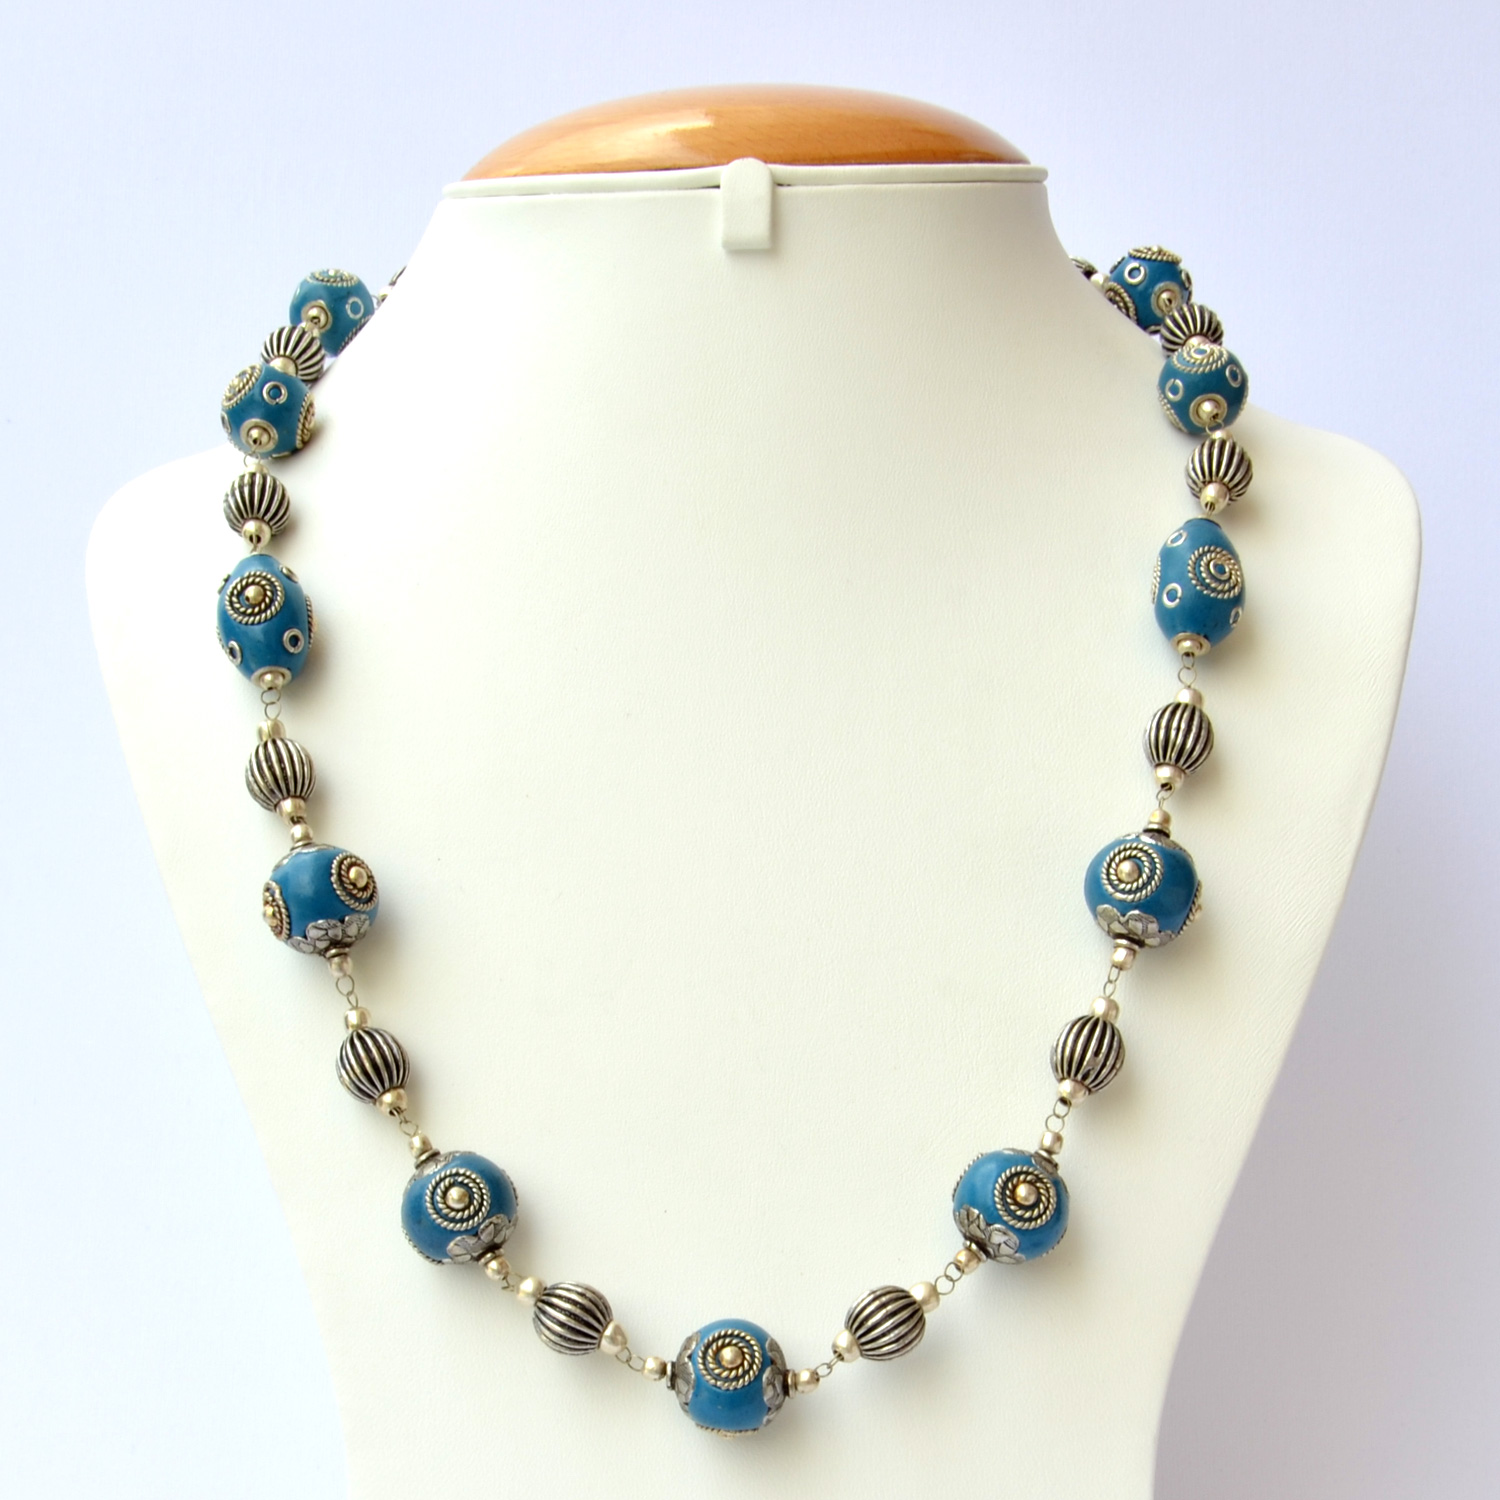 Blue Handmade Necklace Studded with Metal Rings & Metal Balls | Maruti ...